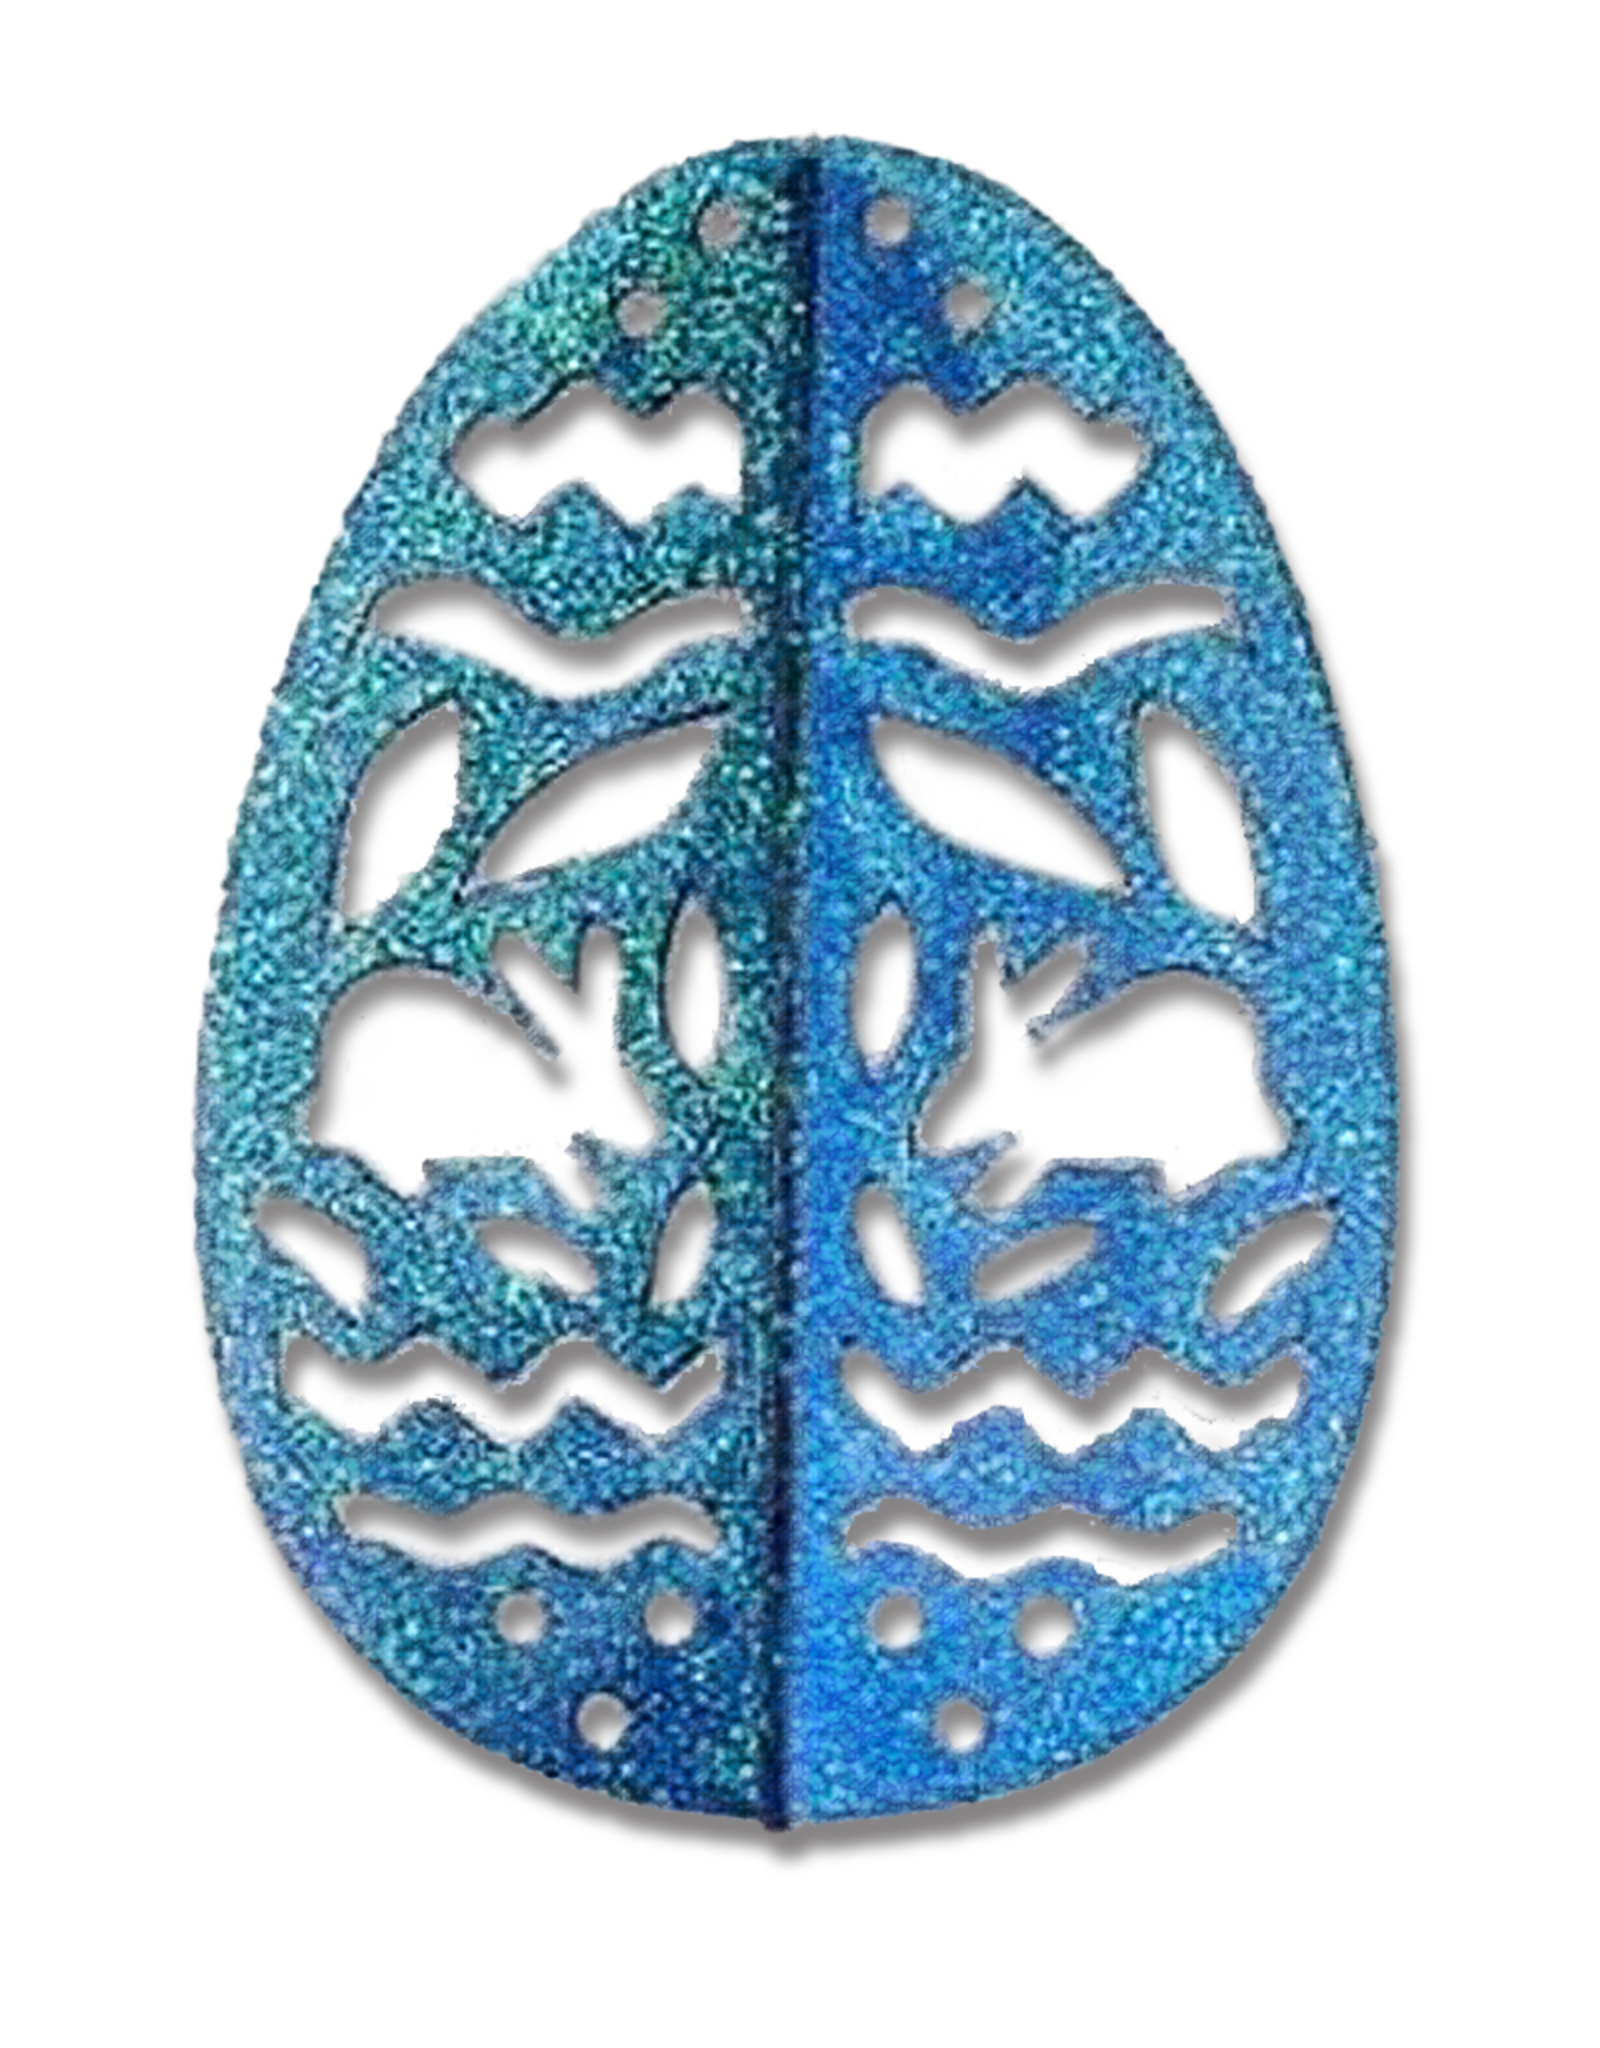 Katherine's Collection Easter Egg Ornament Glittered Laser Cut Blue